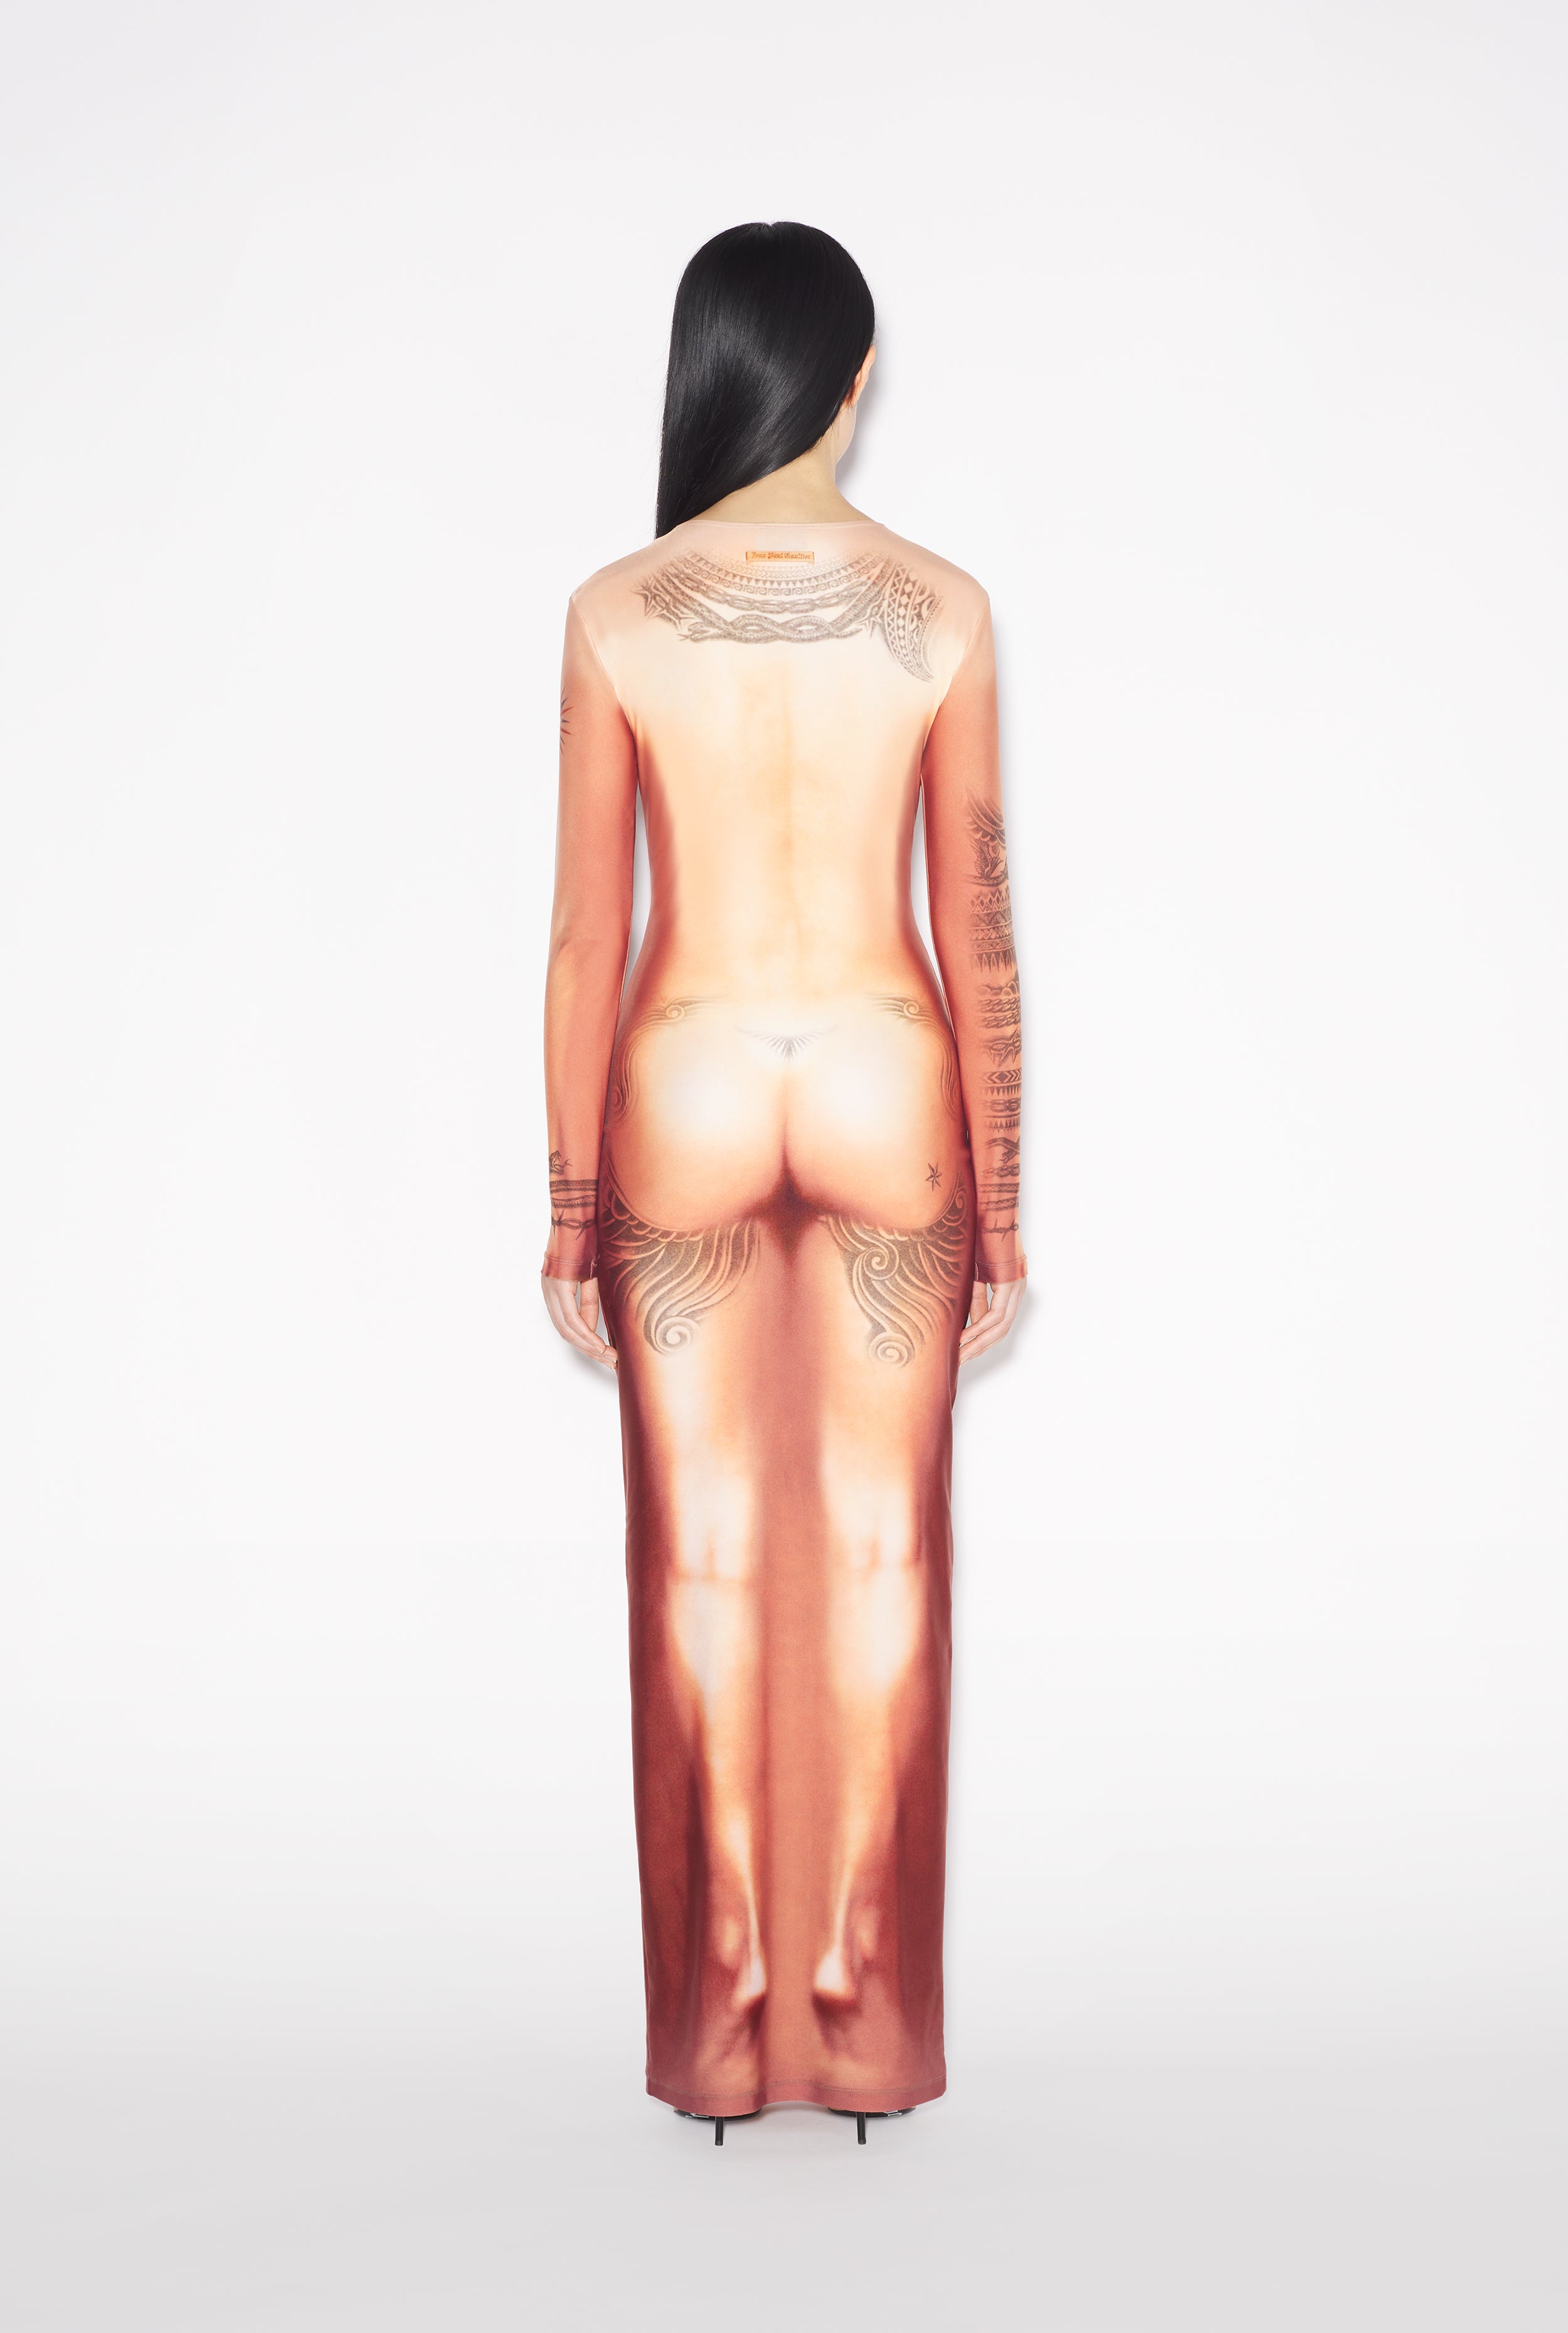 The Long Nude Body Tattoo Dress